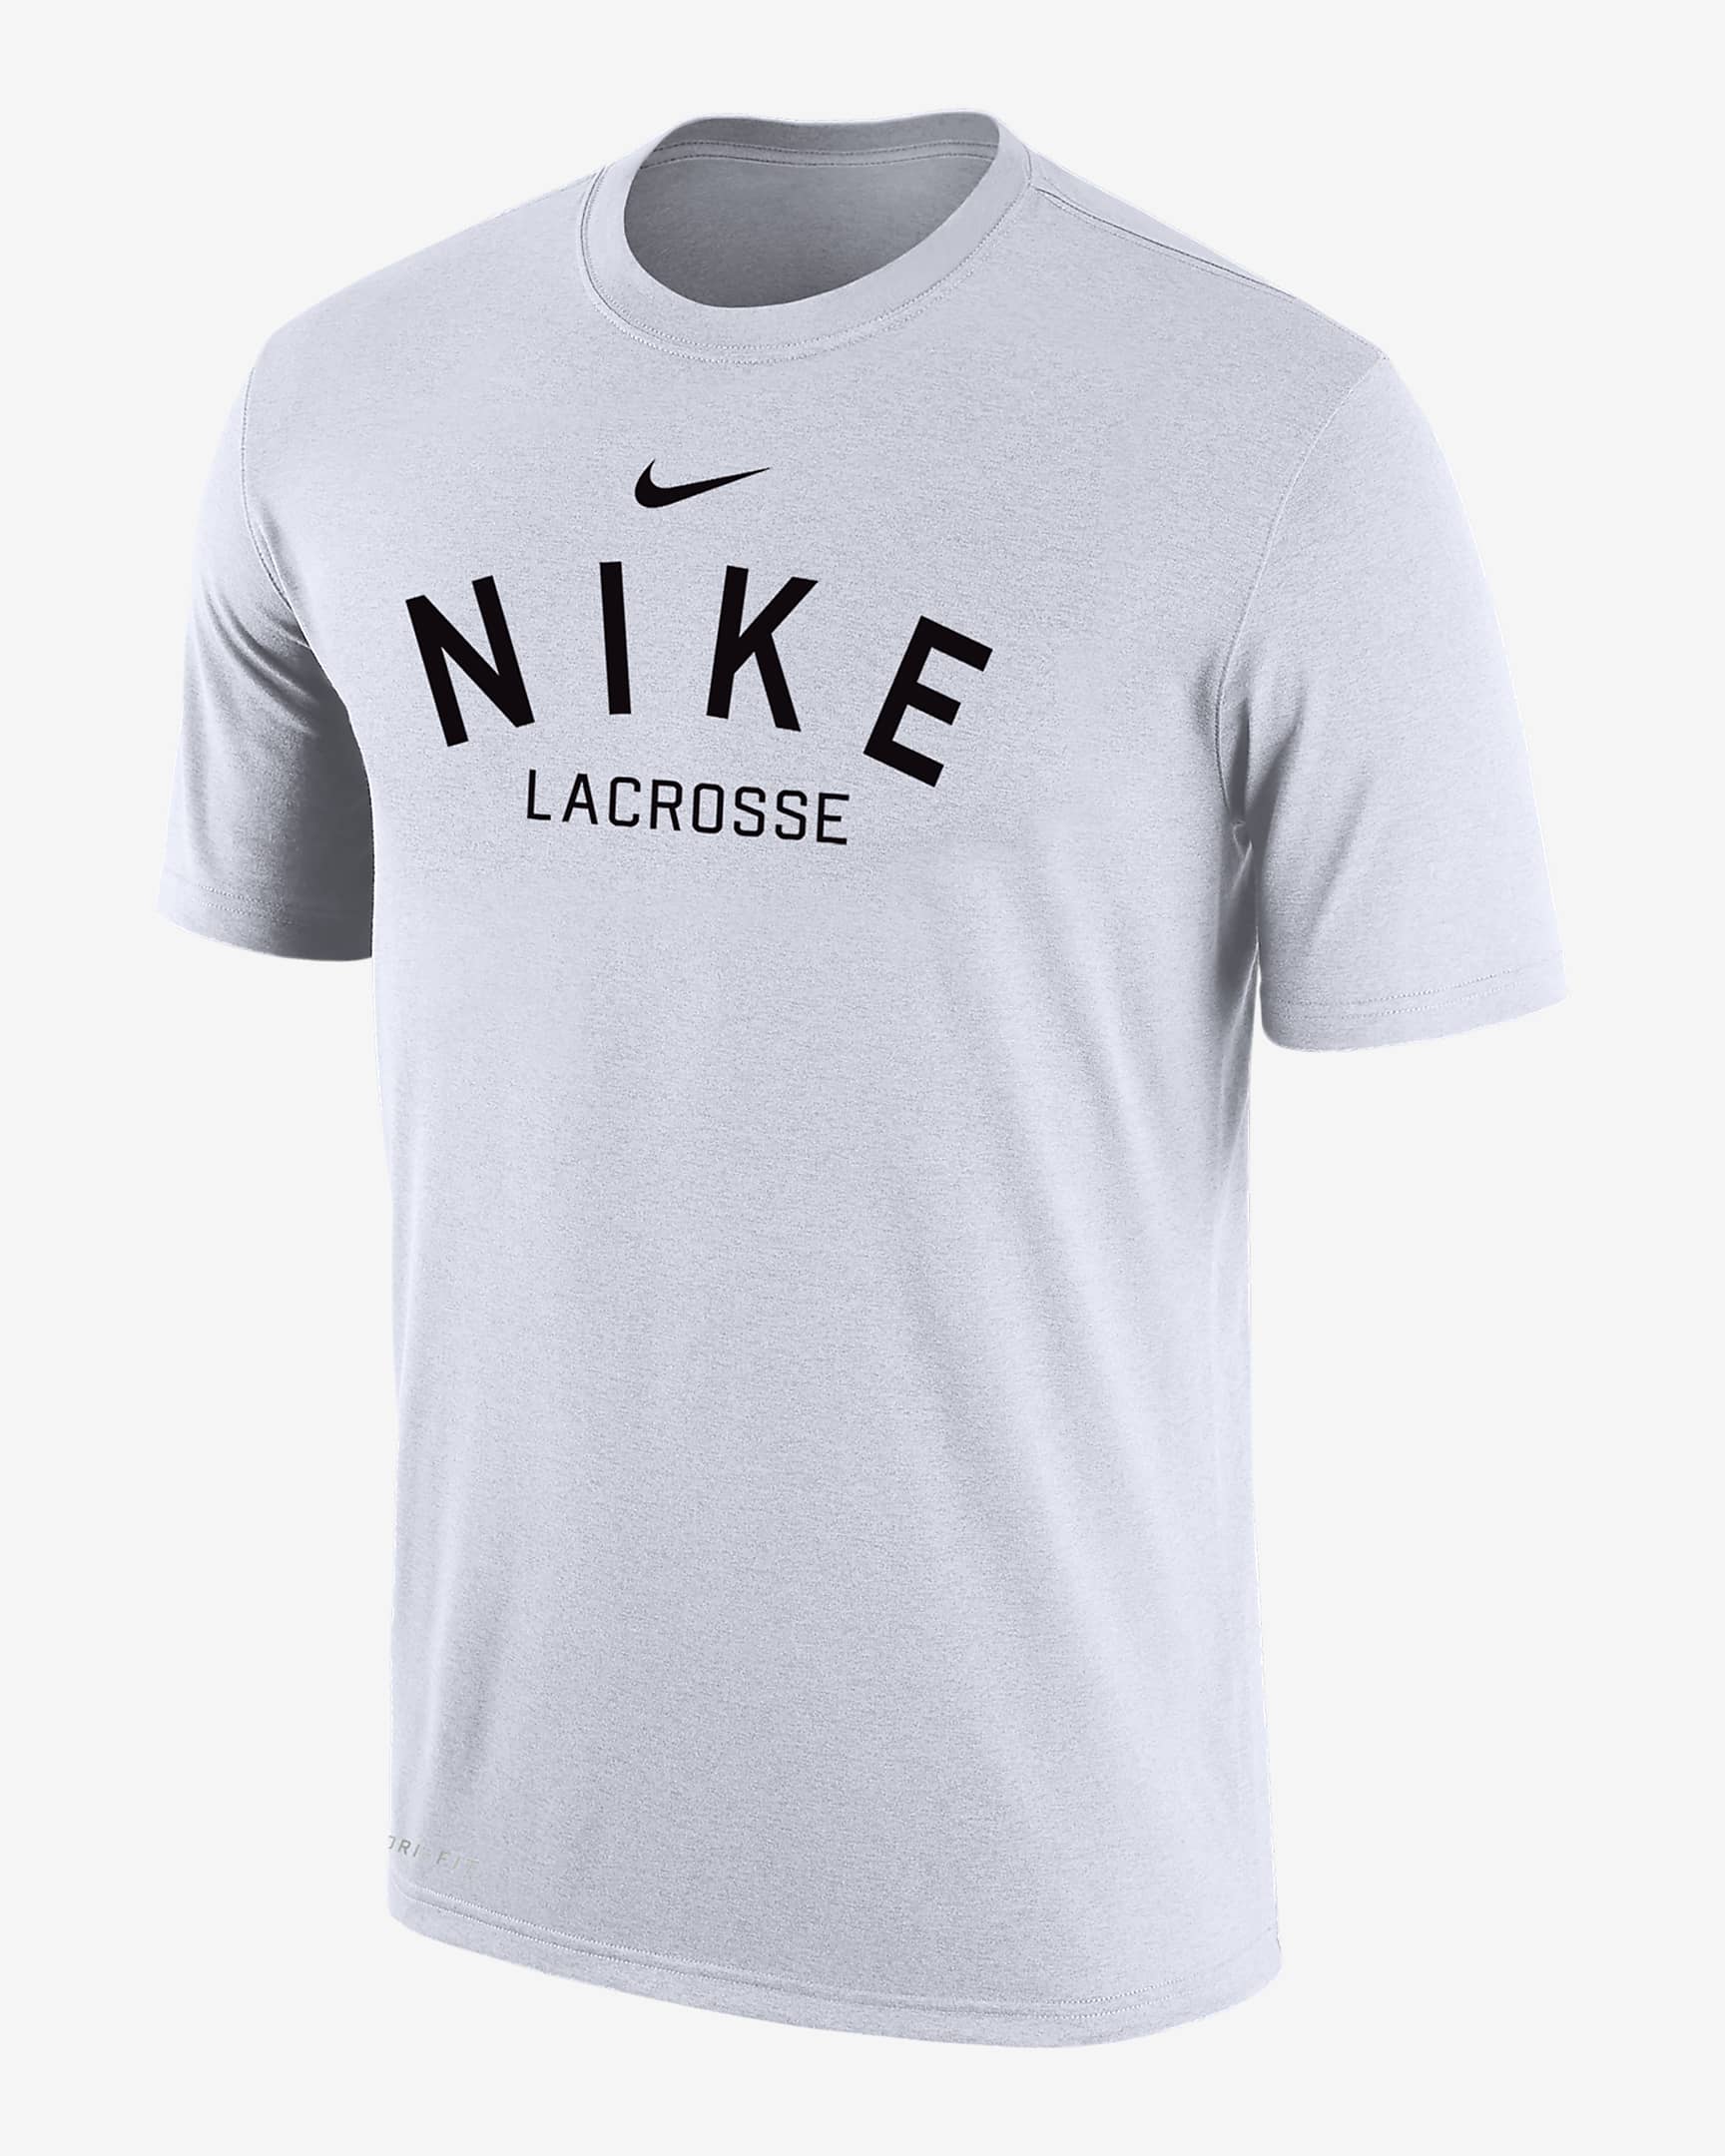 Playera para hombre Nike Swoosh Lacrosse. Nike.com